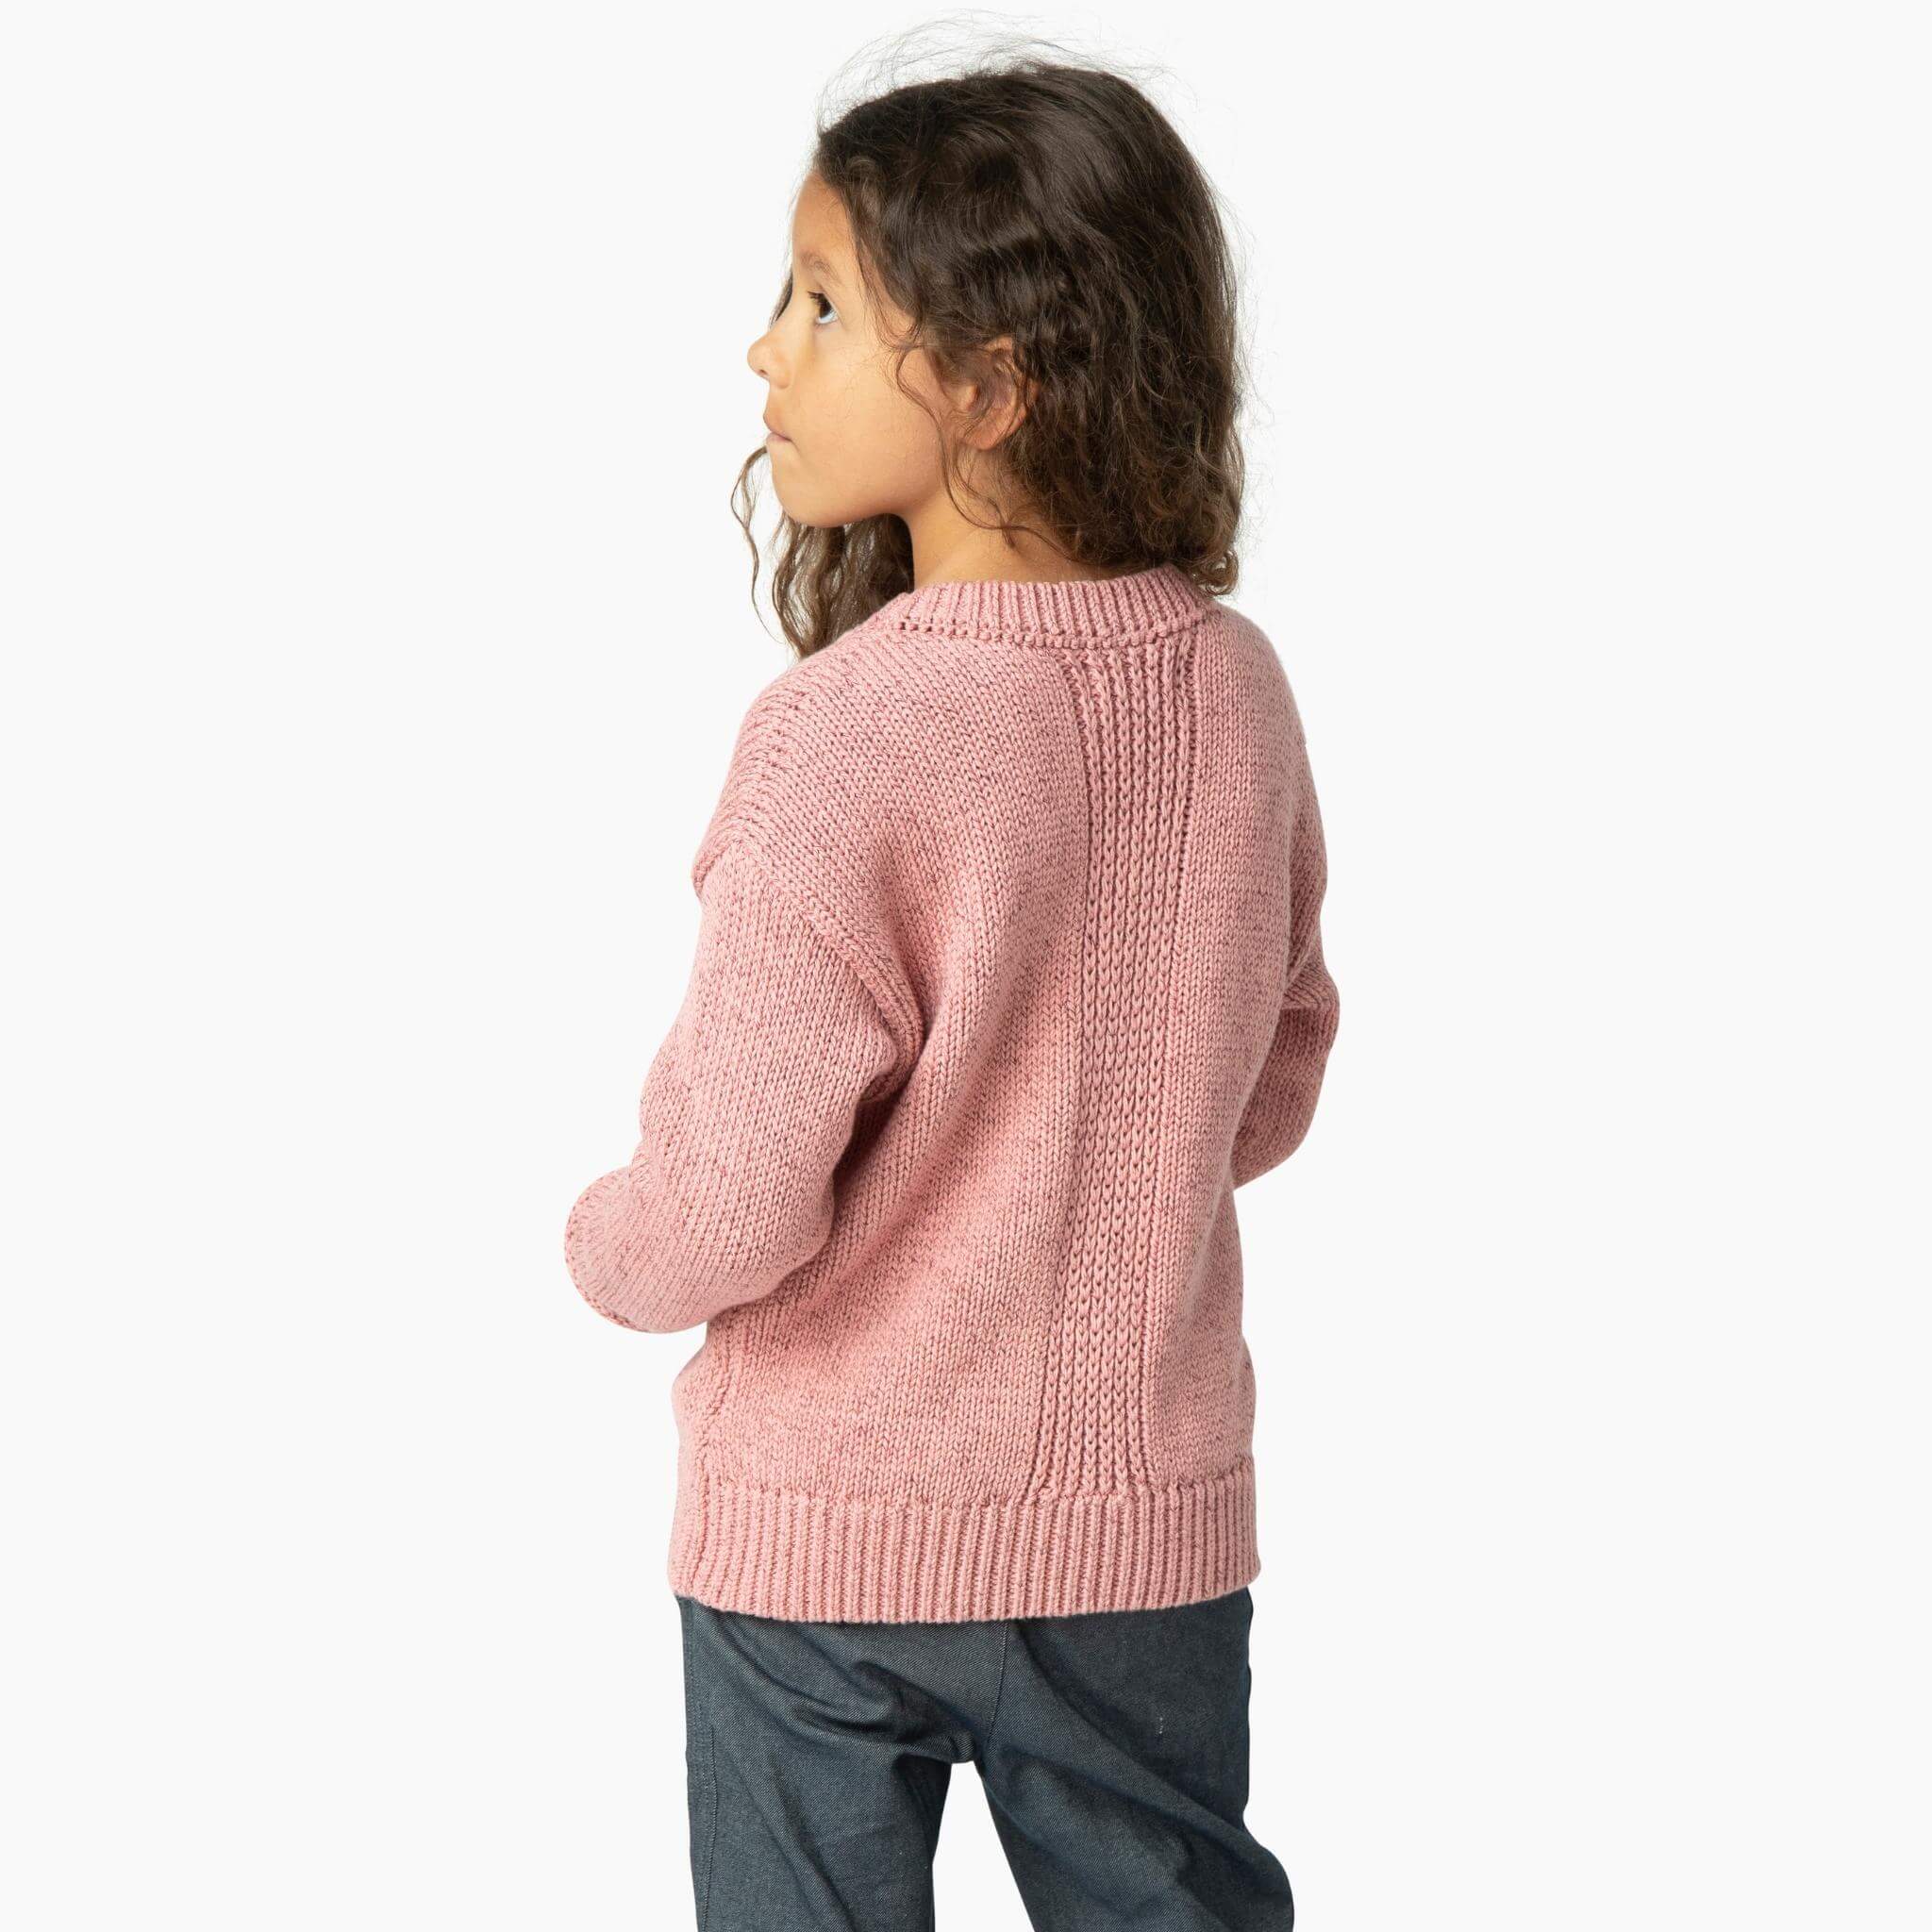 Marled Pink Chunky Sweater